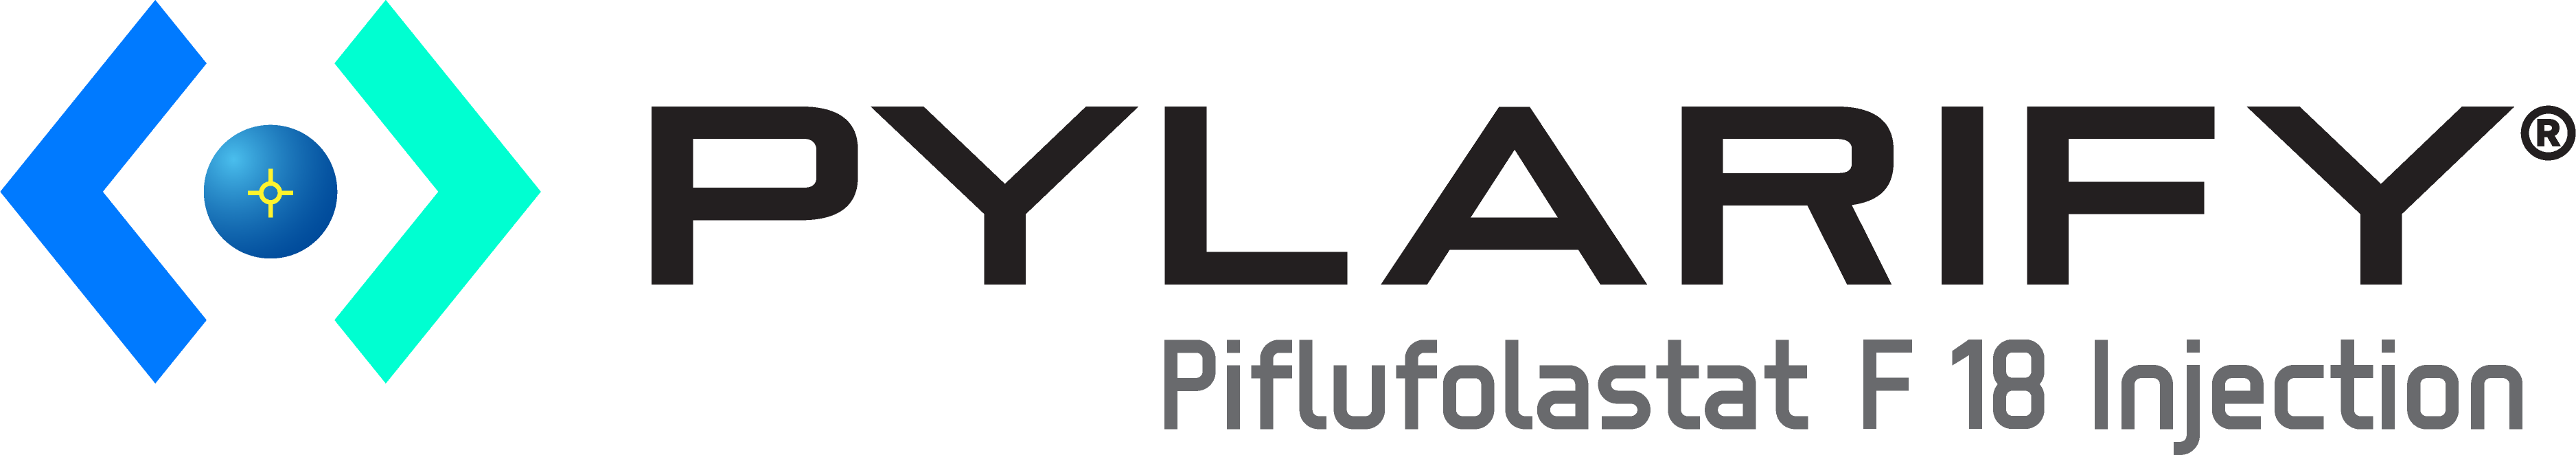 PYLARIFY® piflufolastat F 18 injection